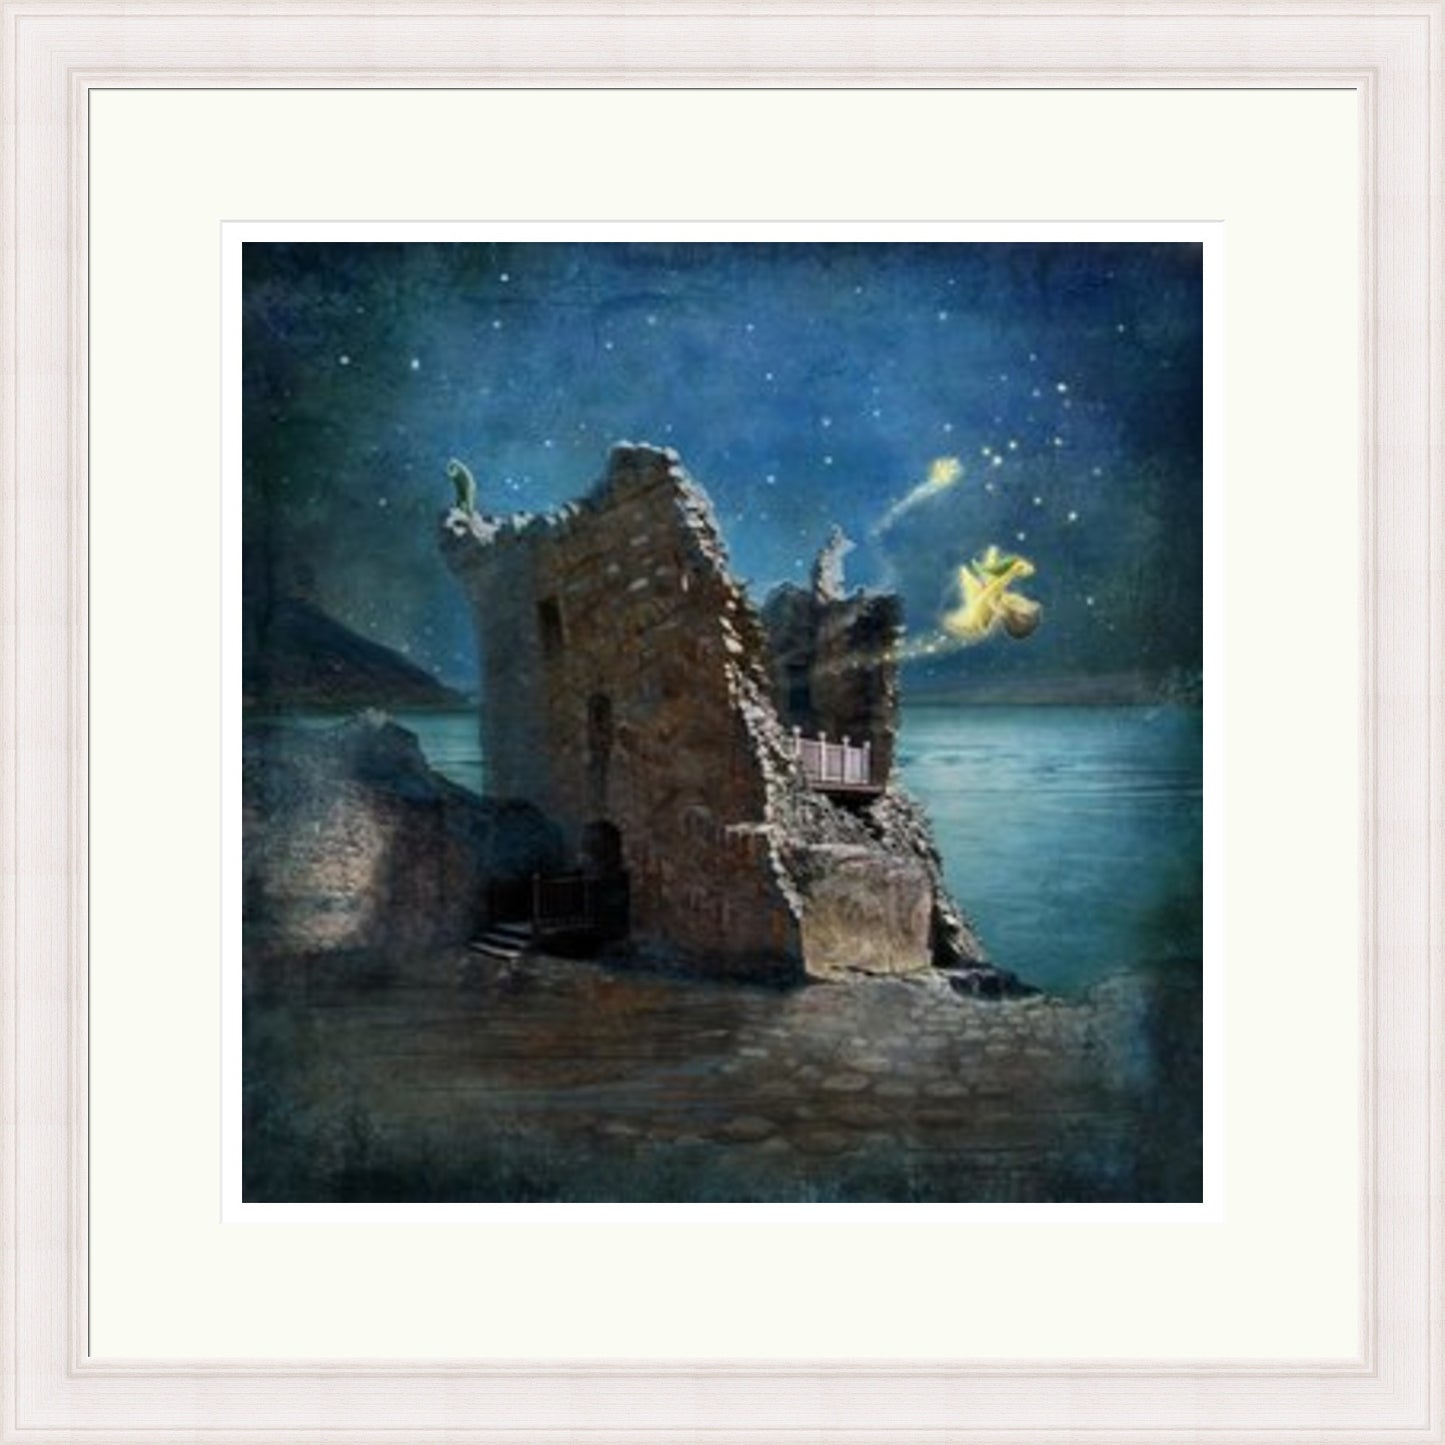 Urquhart Castle's Nightime Secret by Matylda Konecka